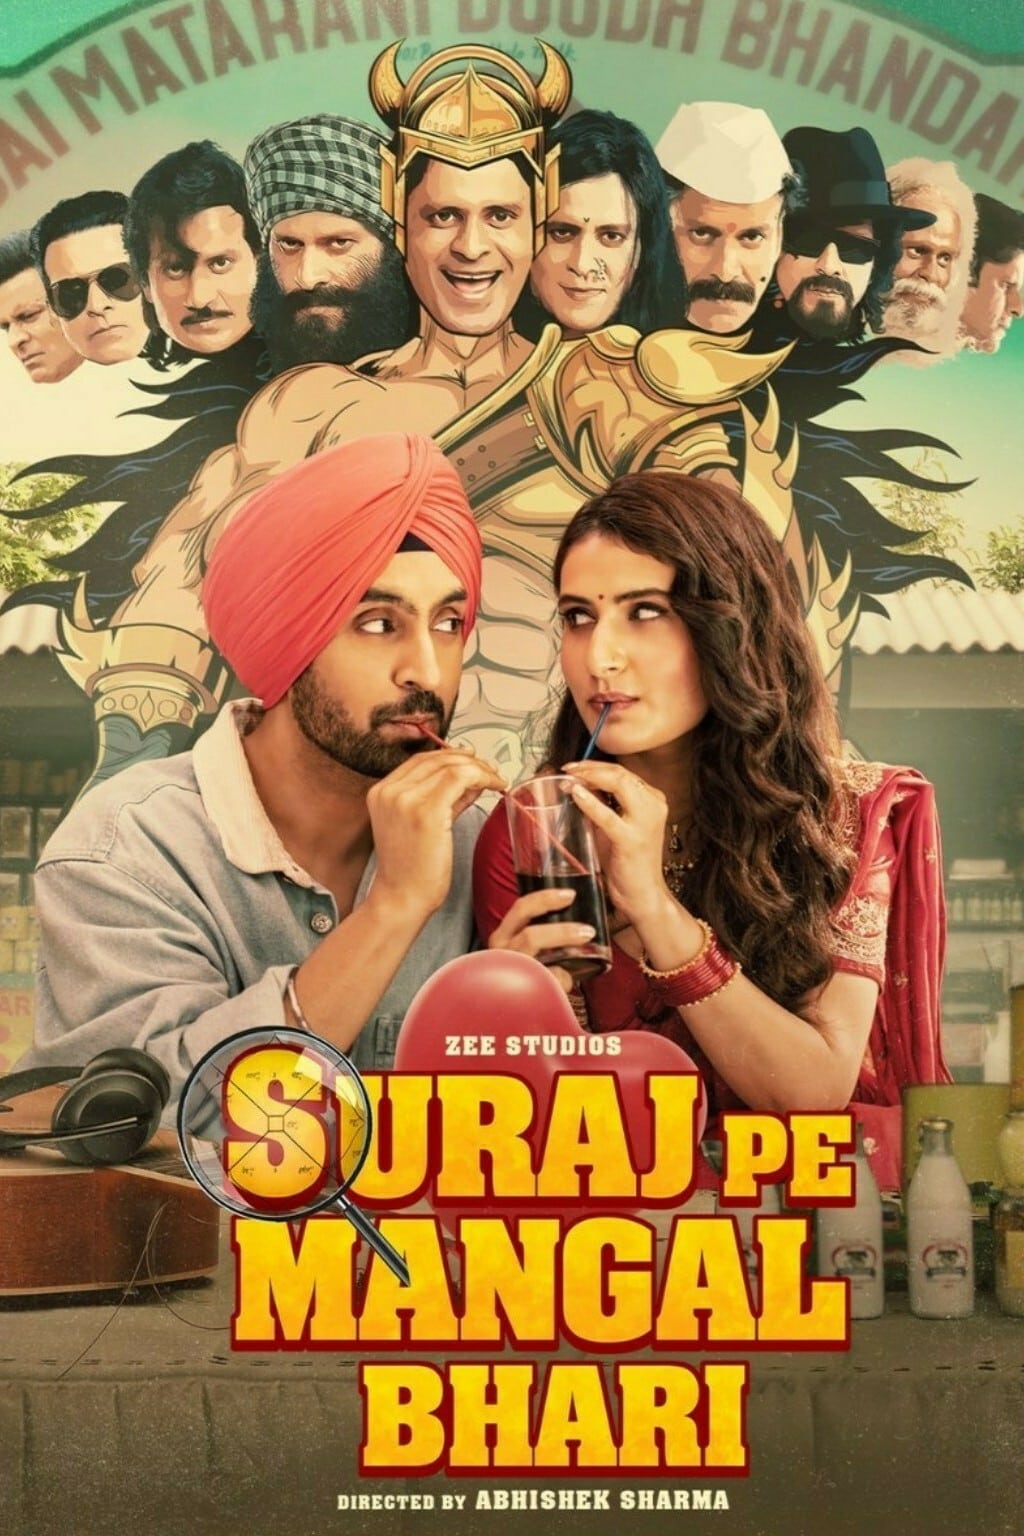 Poster for the movie "Suraj Pe Mangal Bhari"